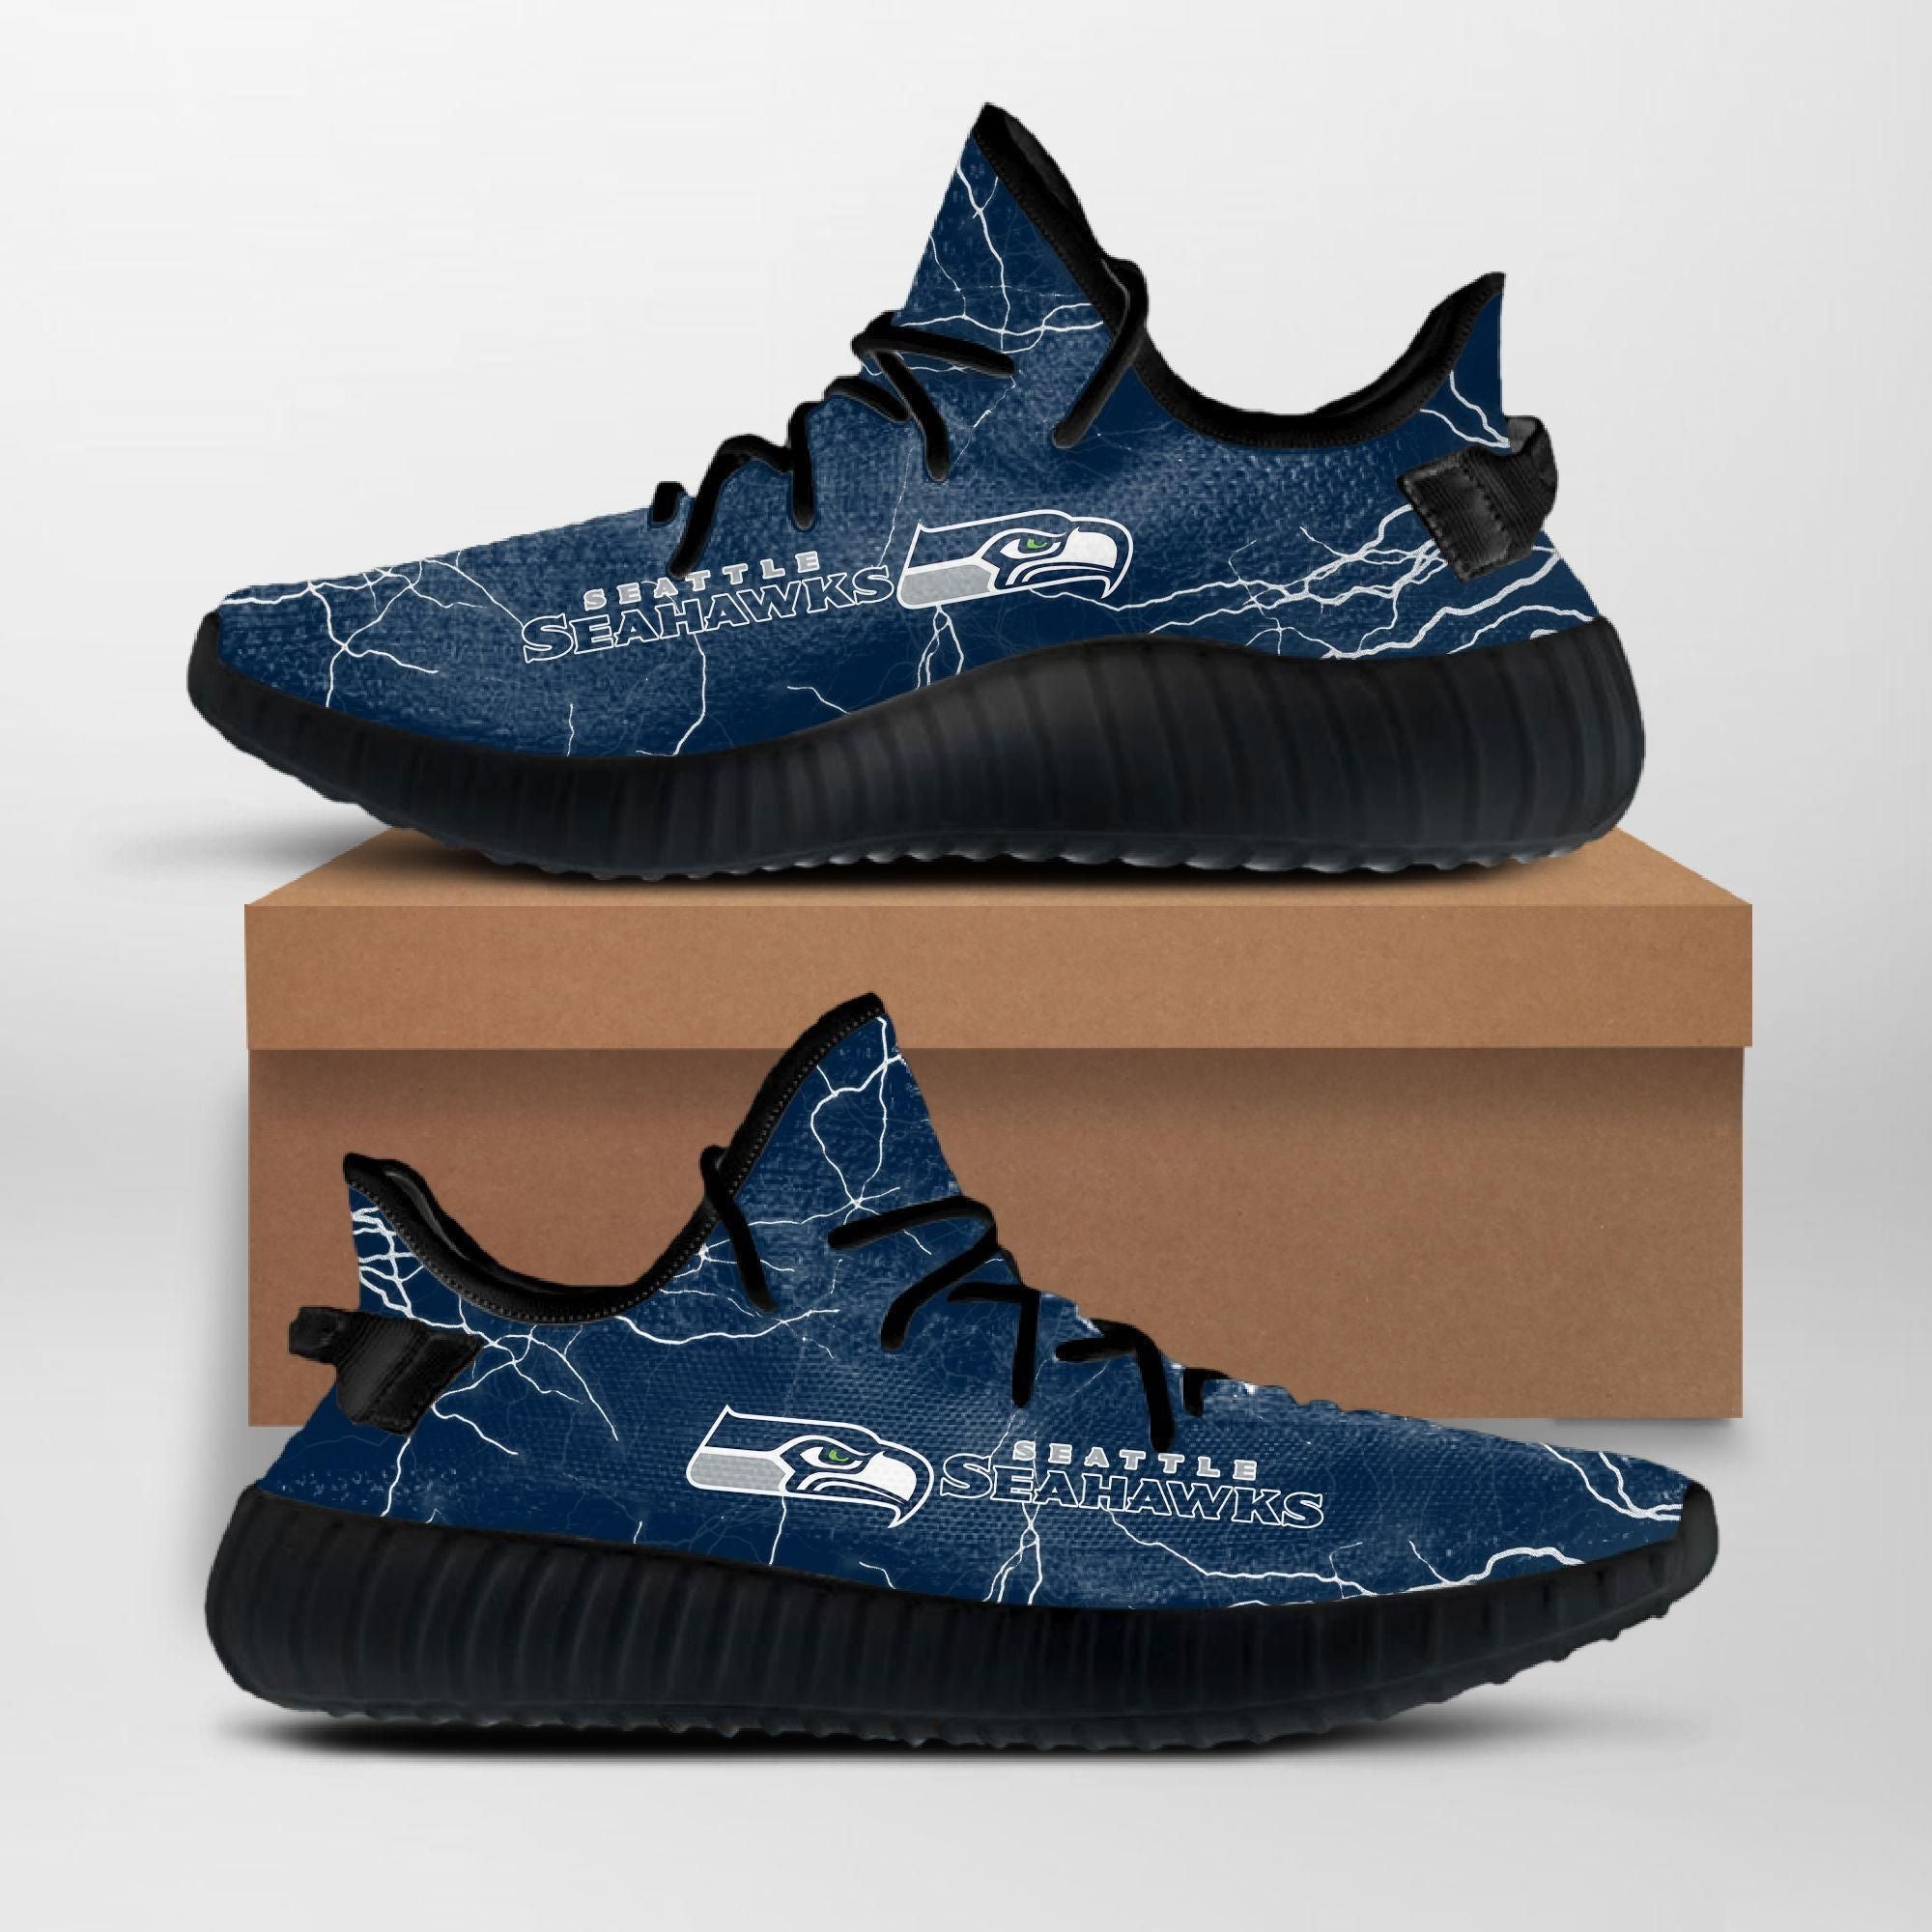 Buy Seattle Seahawks Custom Yeezy NFL Custom Yeezy Shoes For Fans Yeezy Boost 350 V2 Top Trending Custom Shoes Gift